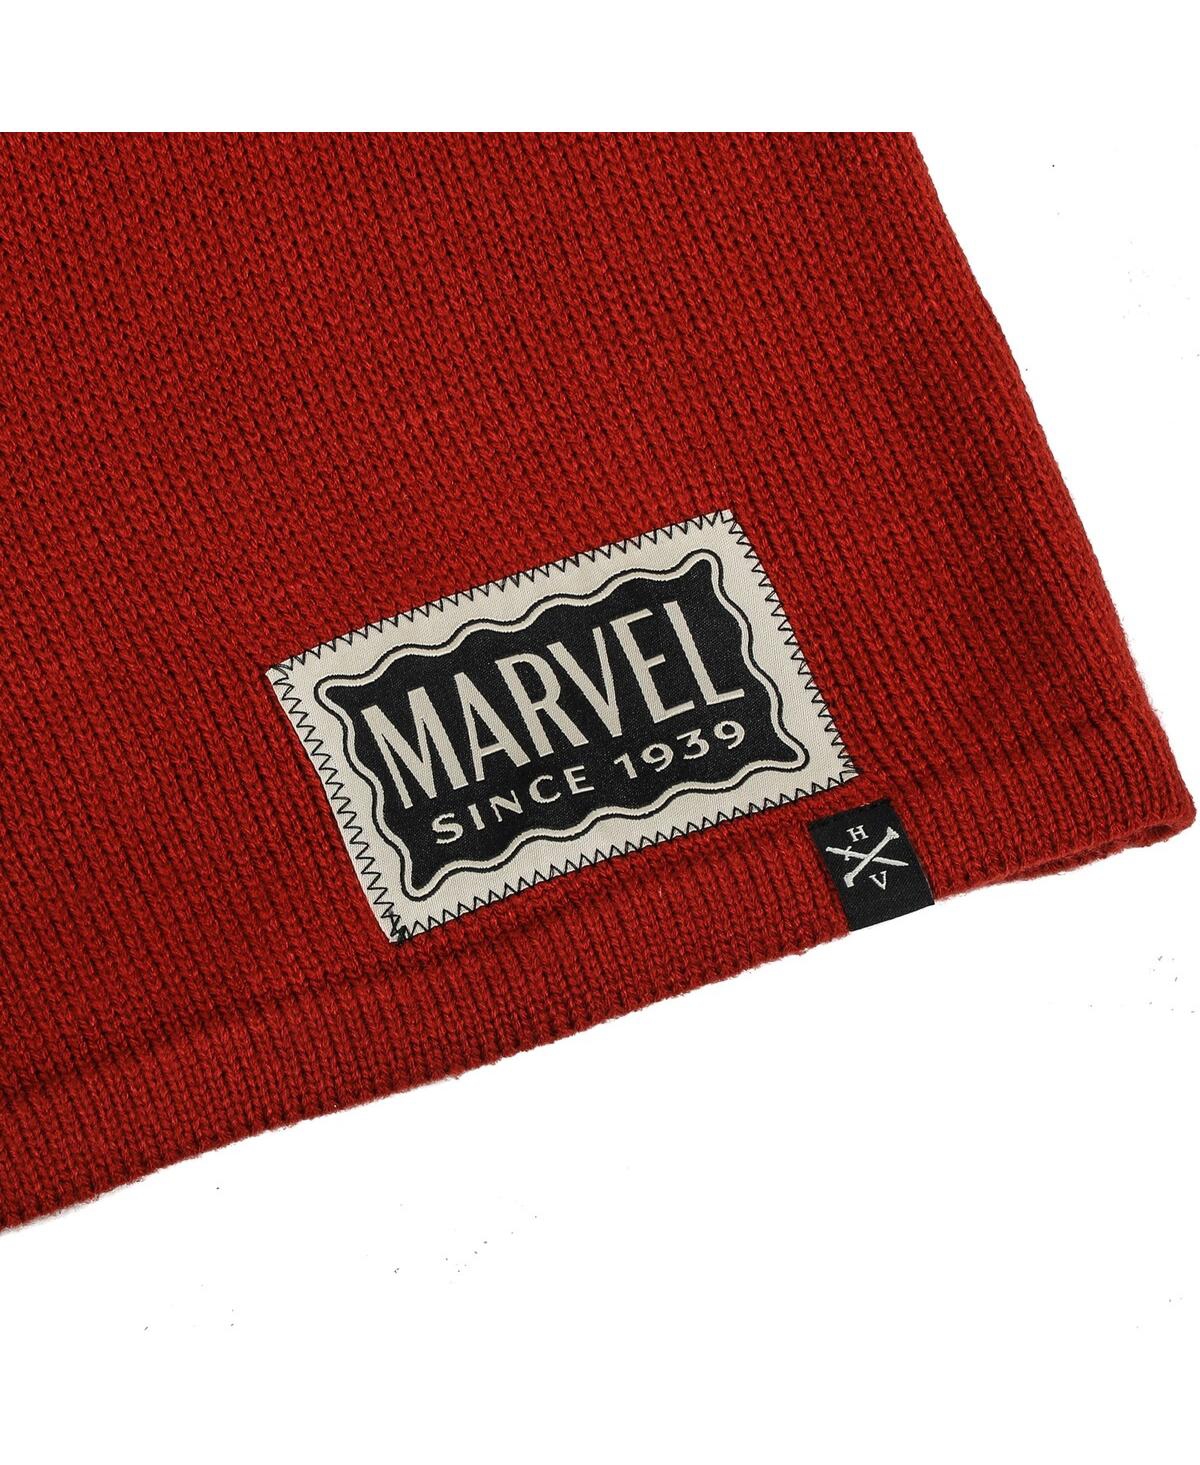 Shop Marvel Men's Red  Graphic Varsity Sweater